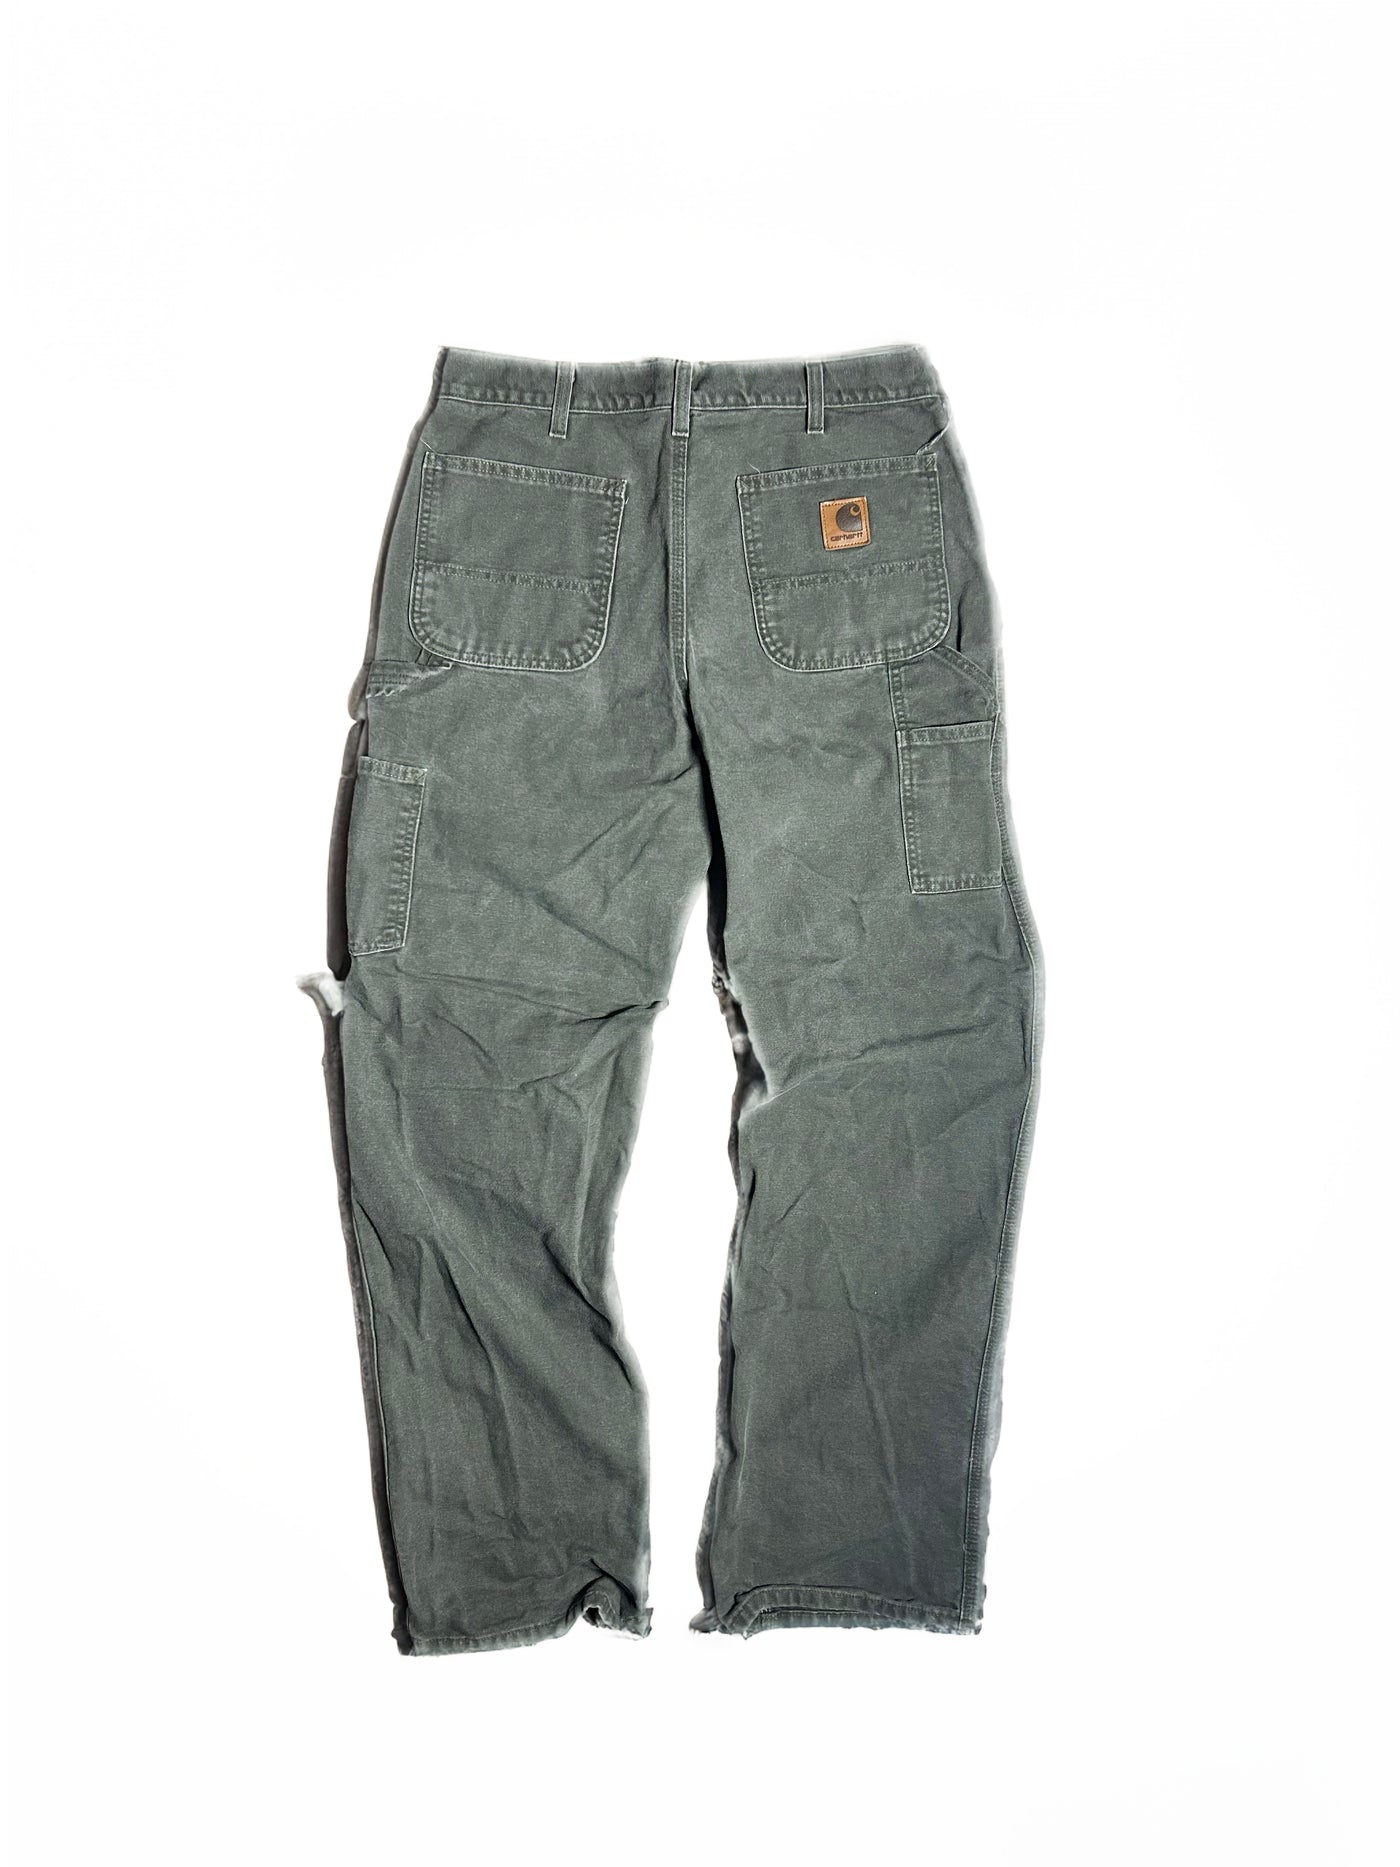 Vintage 90s Olive Green Carhartt Pants